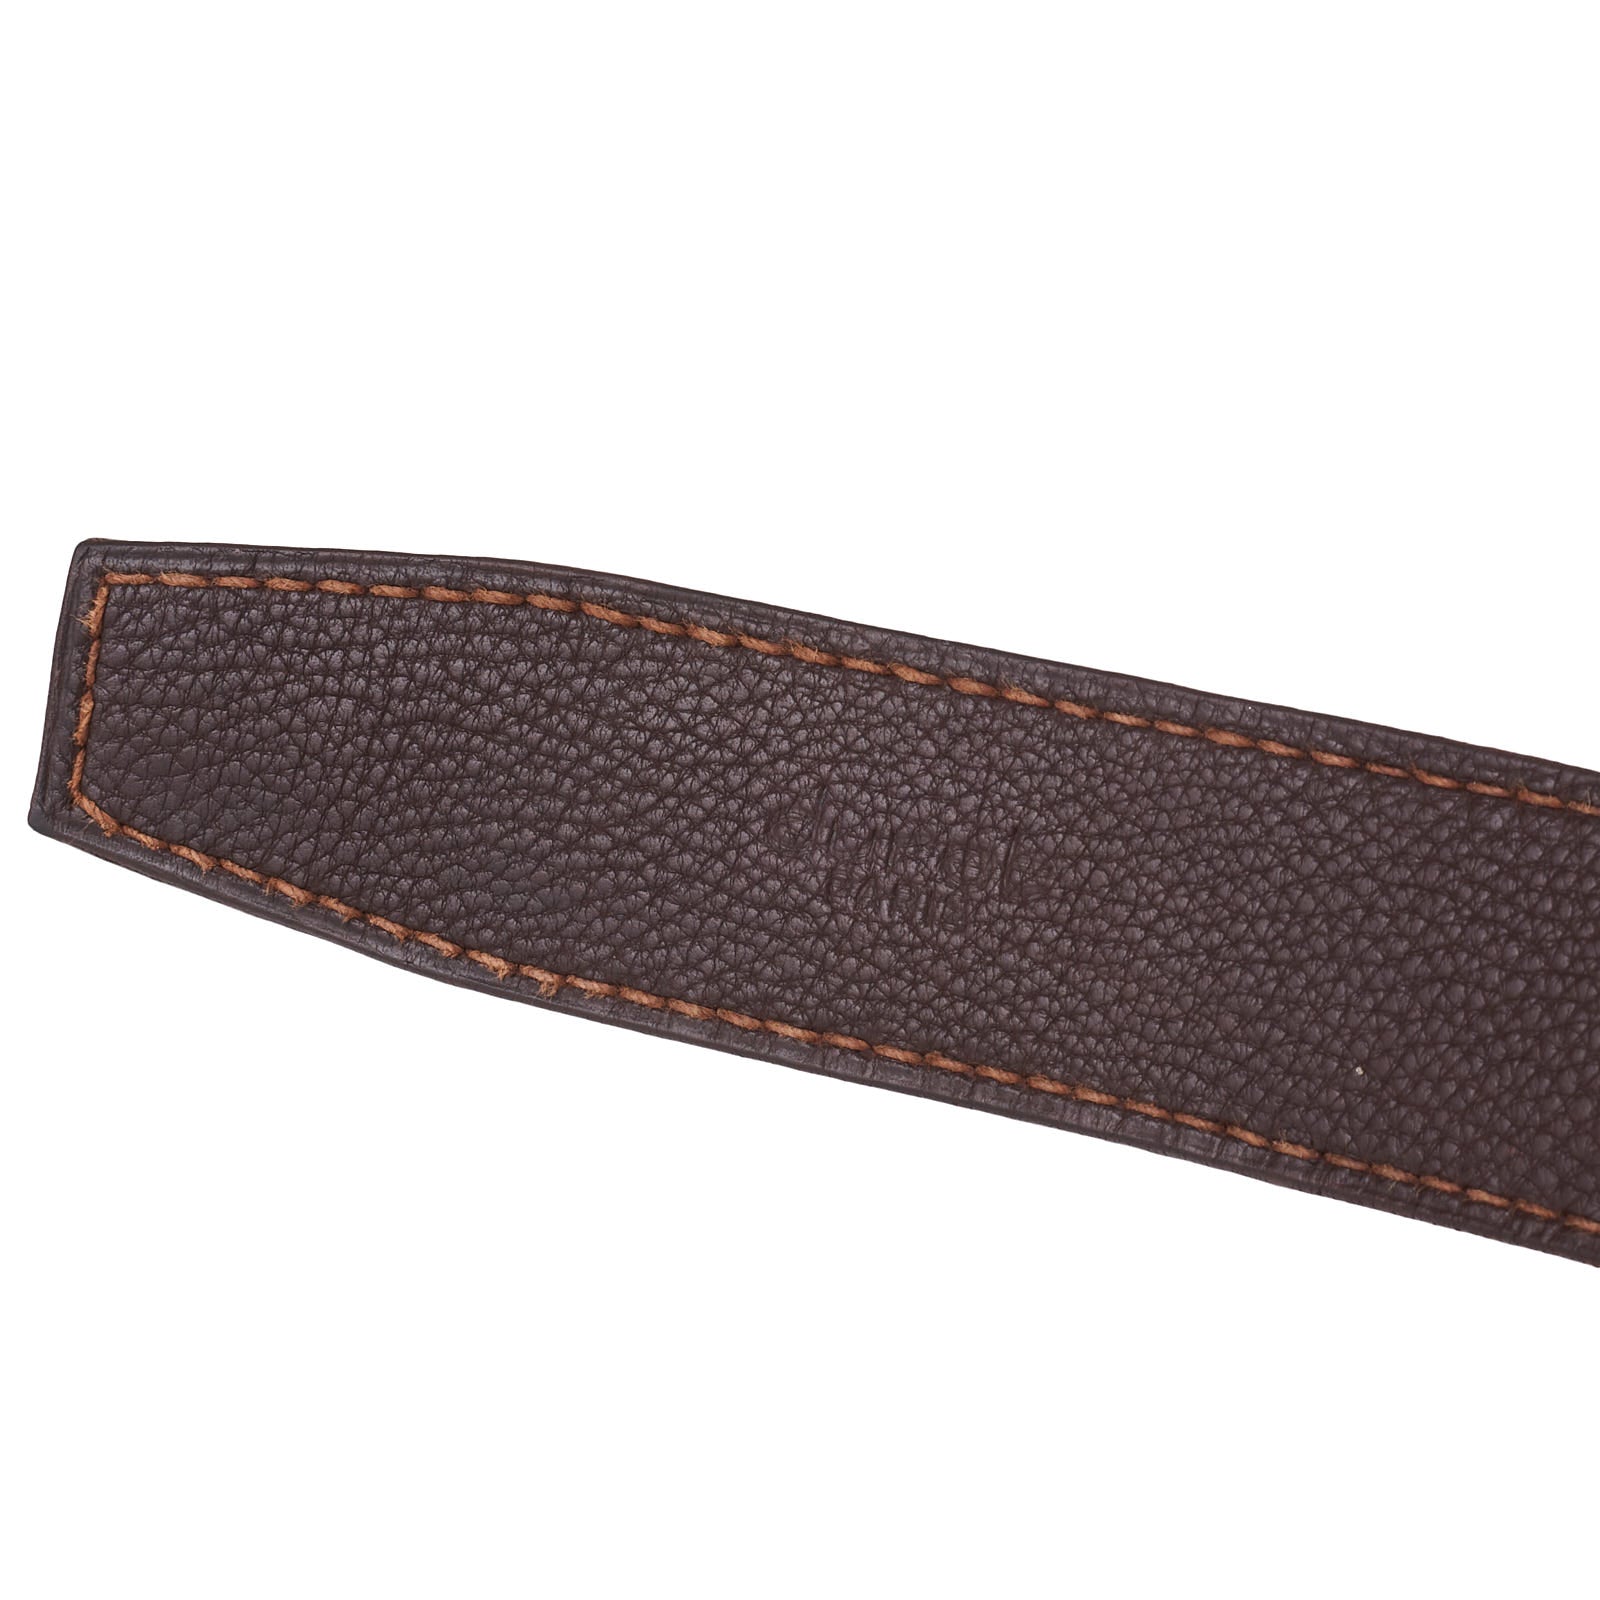 DURET Paris Chestnut Suede Calf Leather Belt with Gold Alpha Buckle 37" 95cm DURET